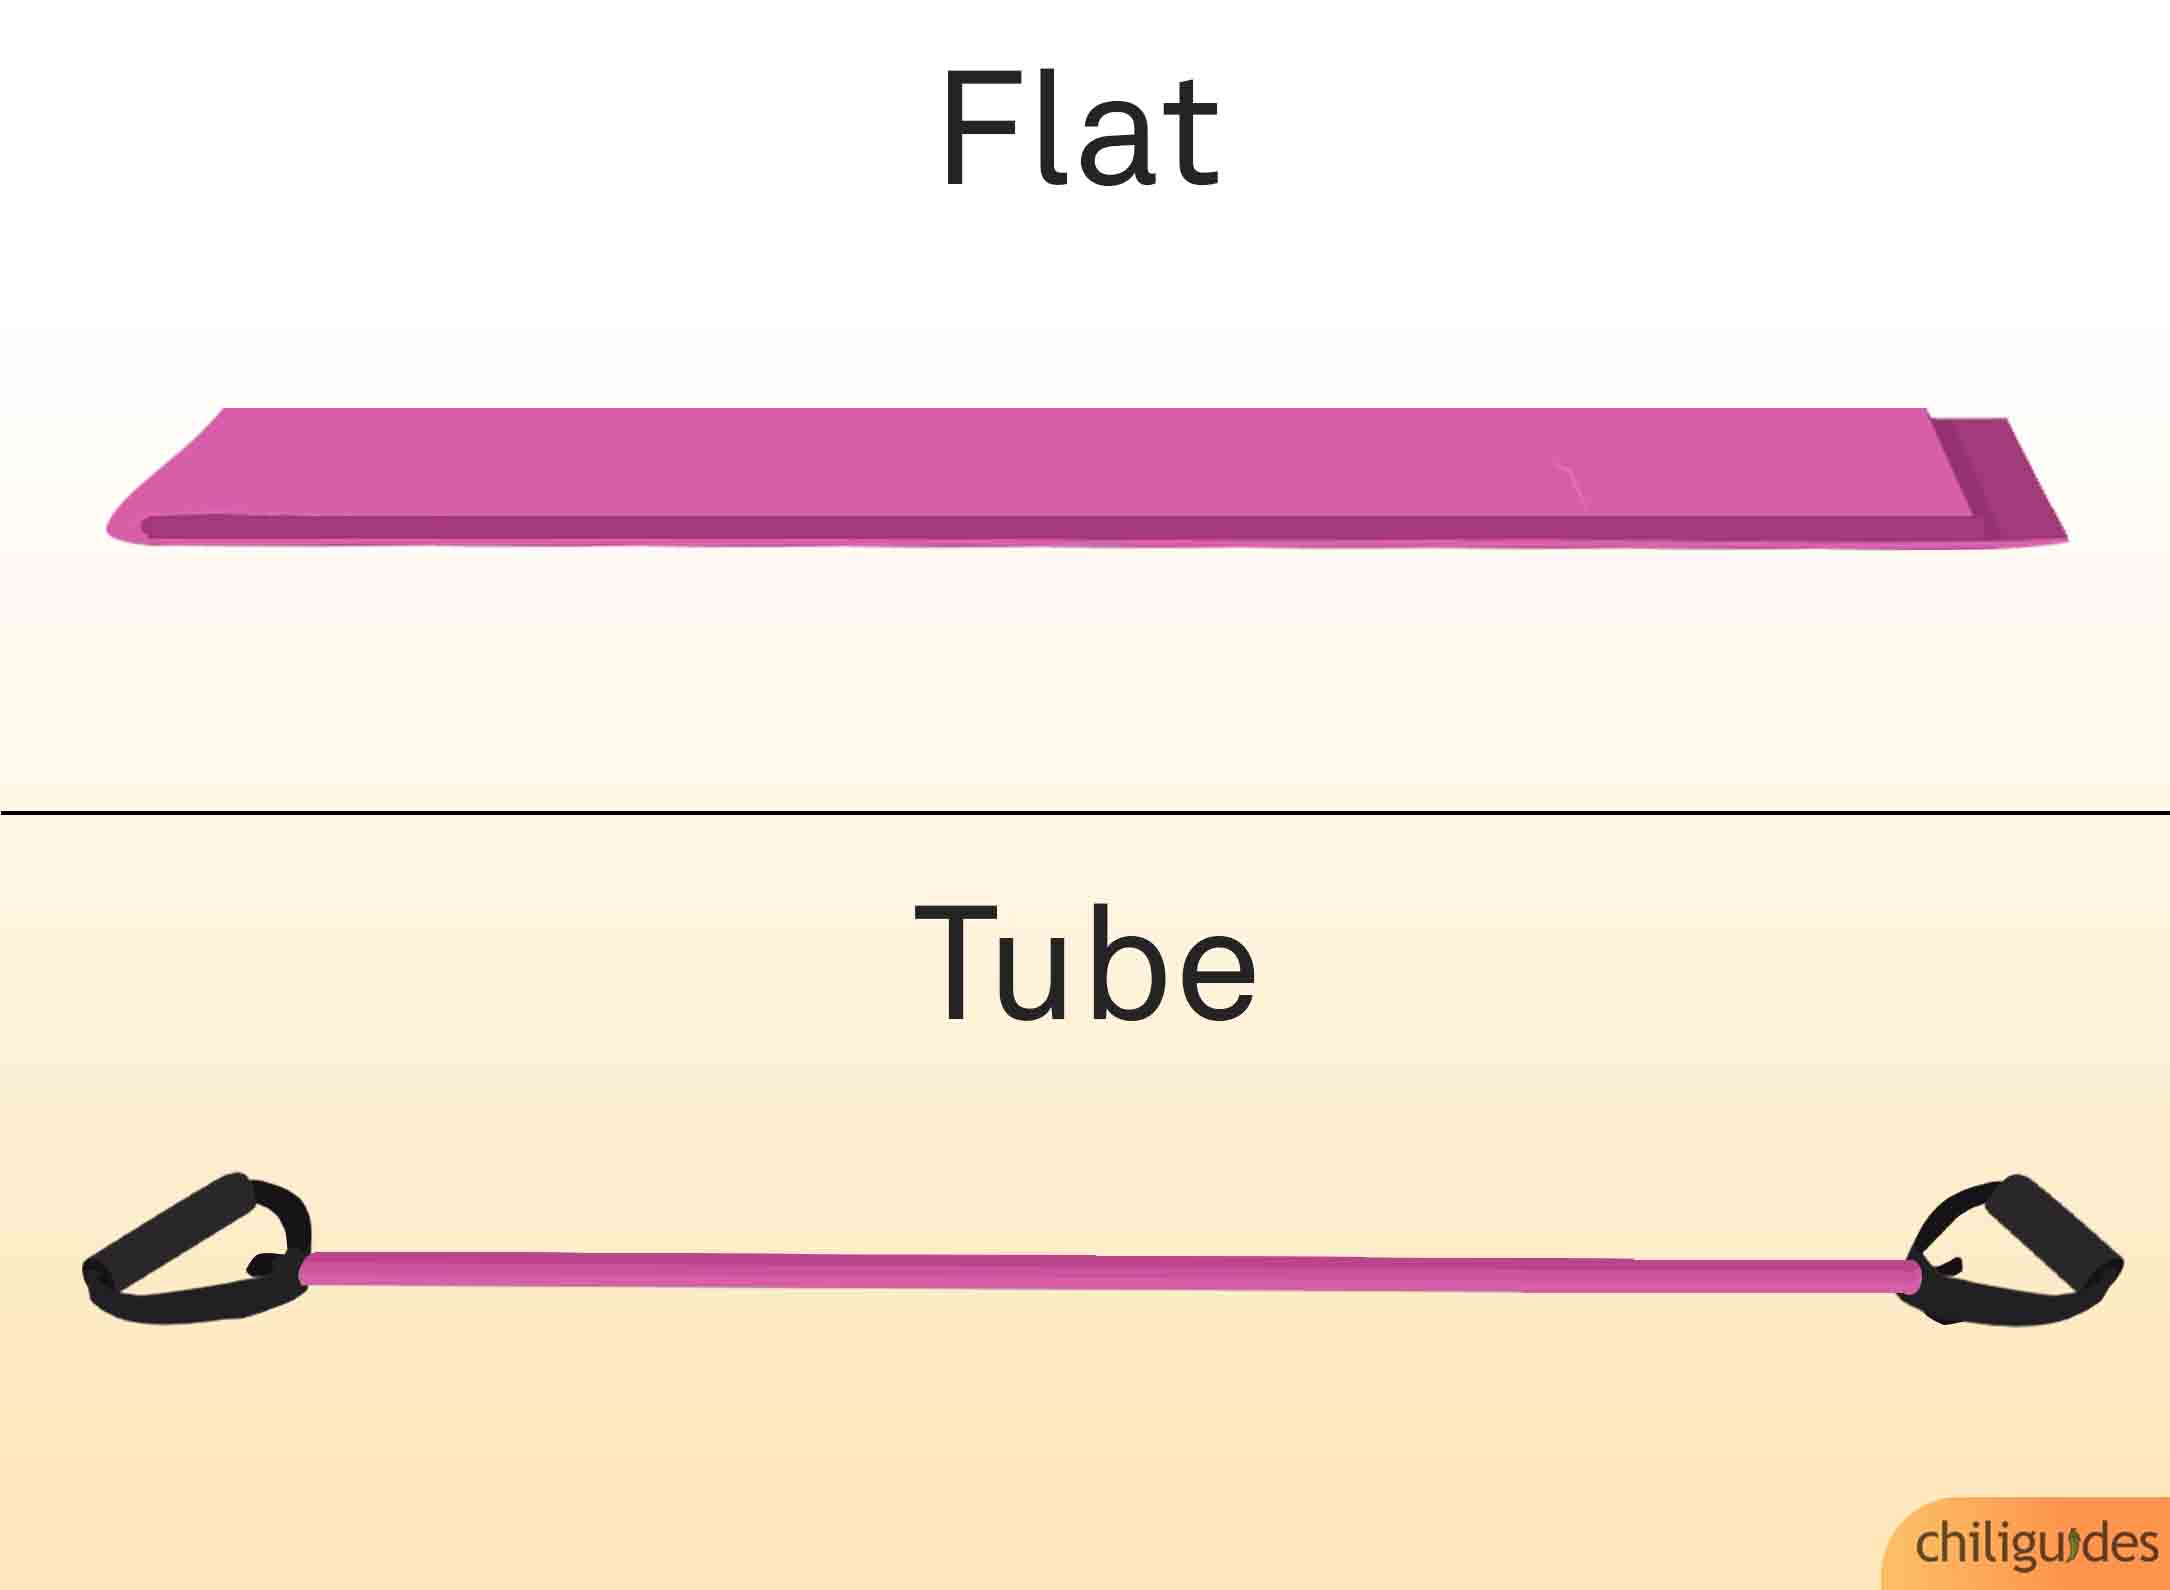 Flat bands vs. Tube bands